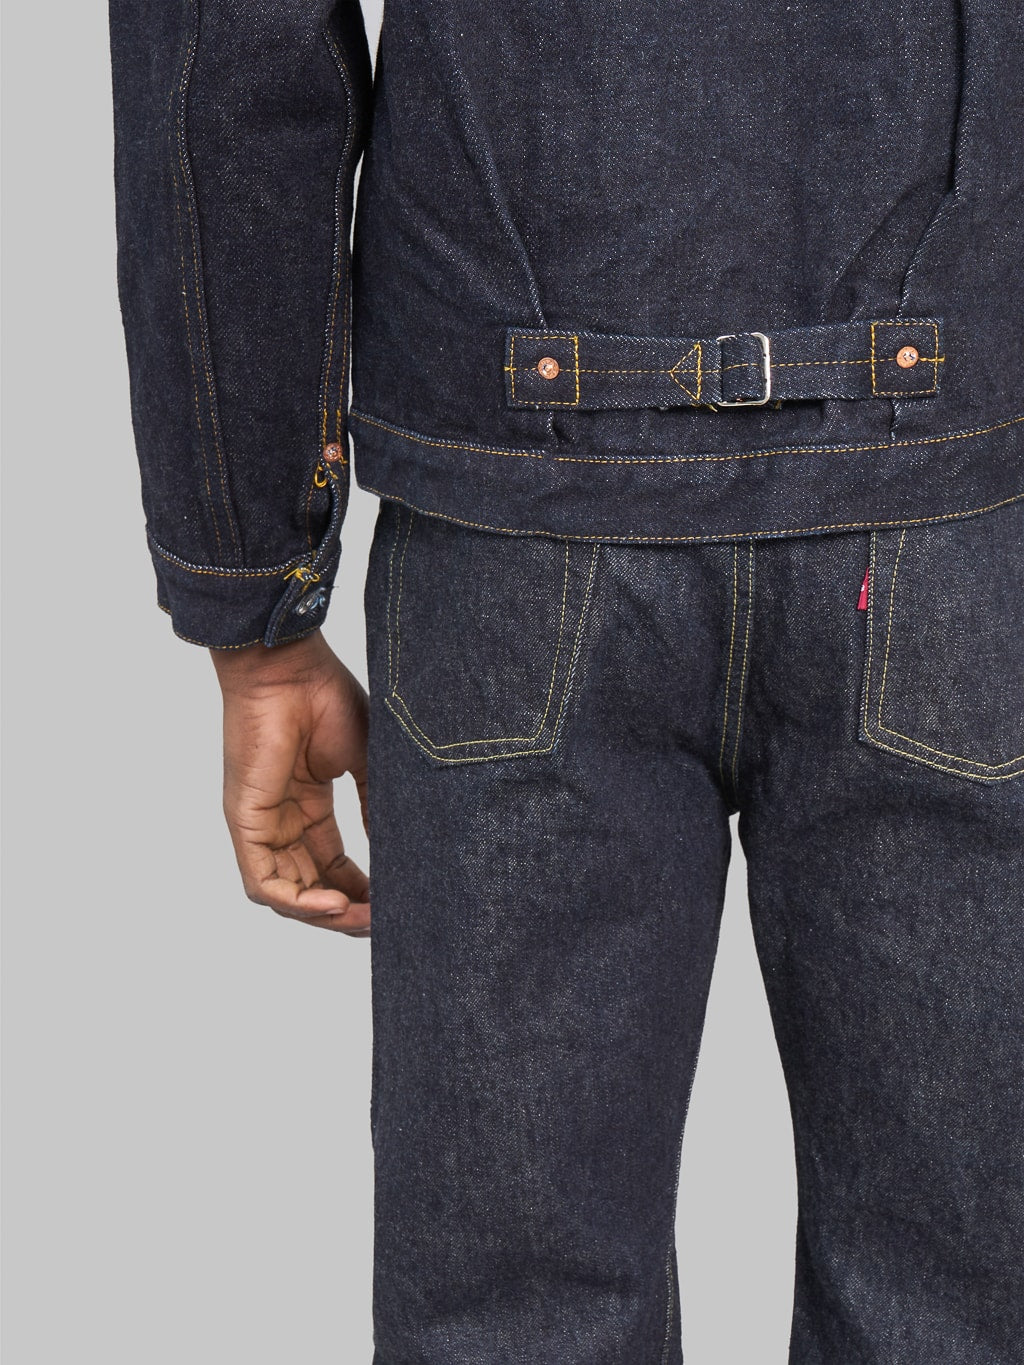 Samurai Jeans S551XX25oz 25th Limited Edition Type I Denim Jacket back cinch